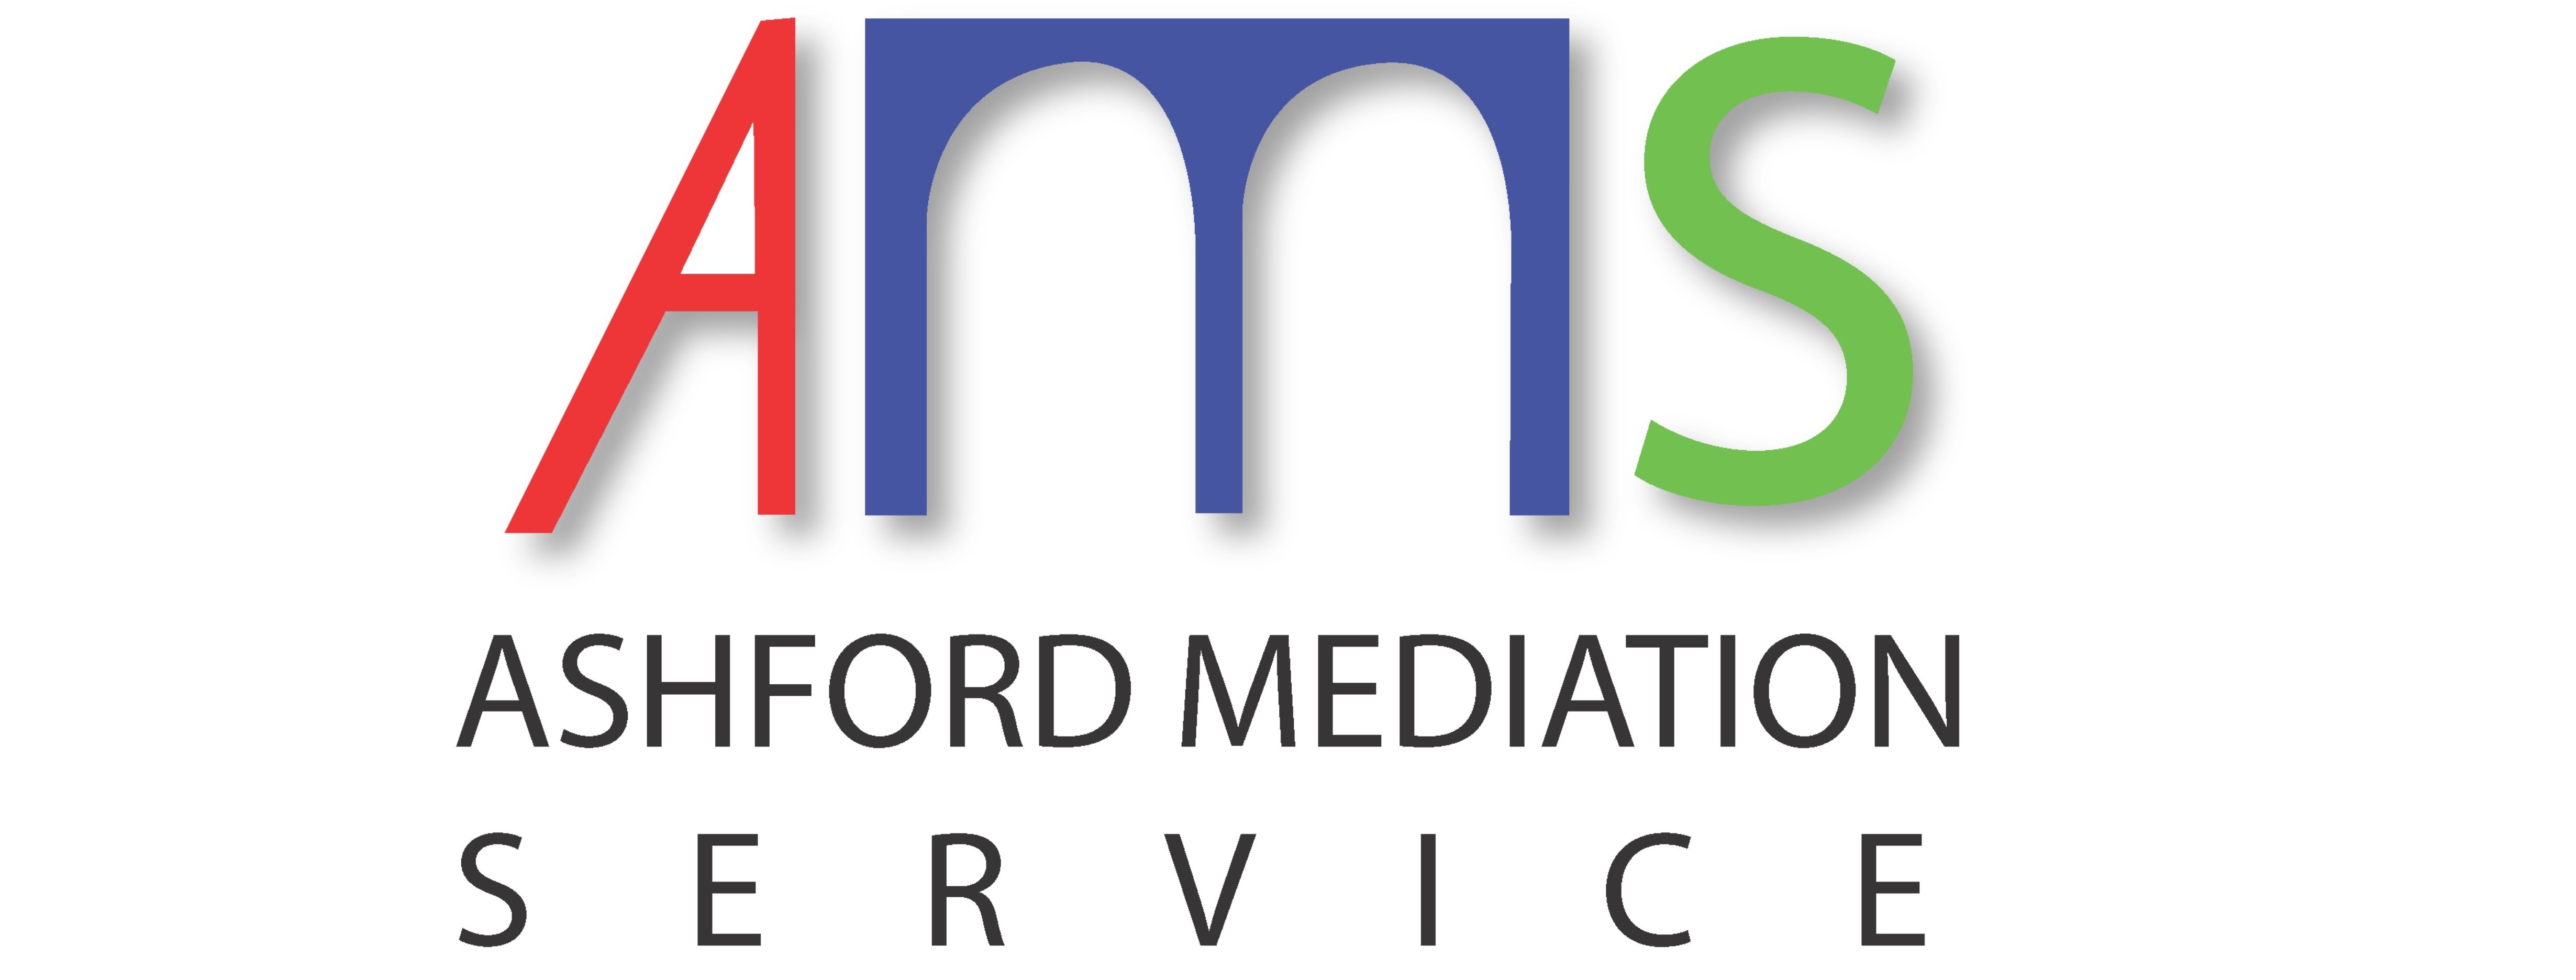 Ashford Mediation Service logo